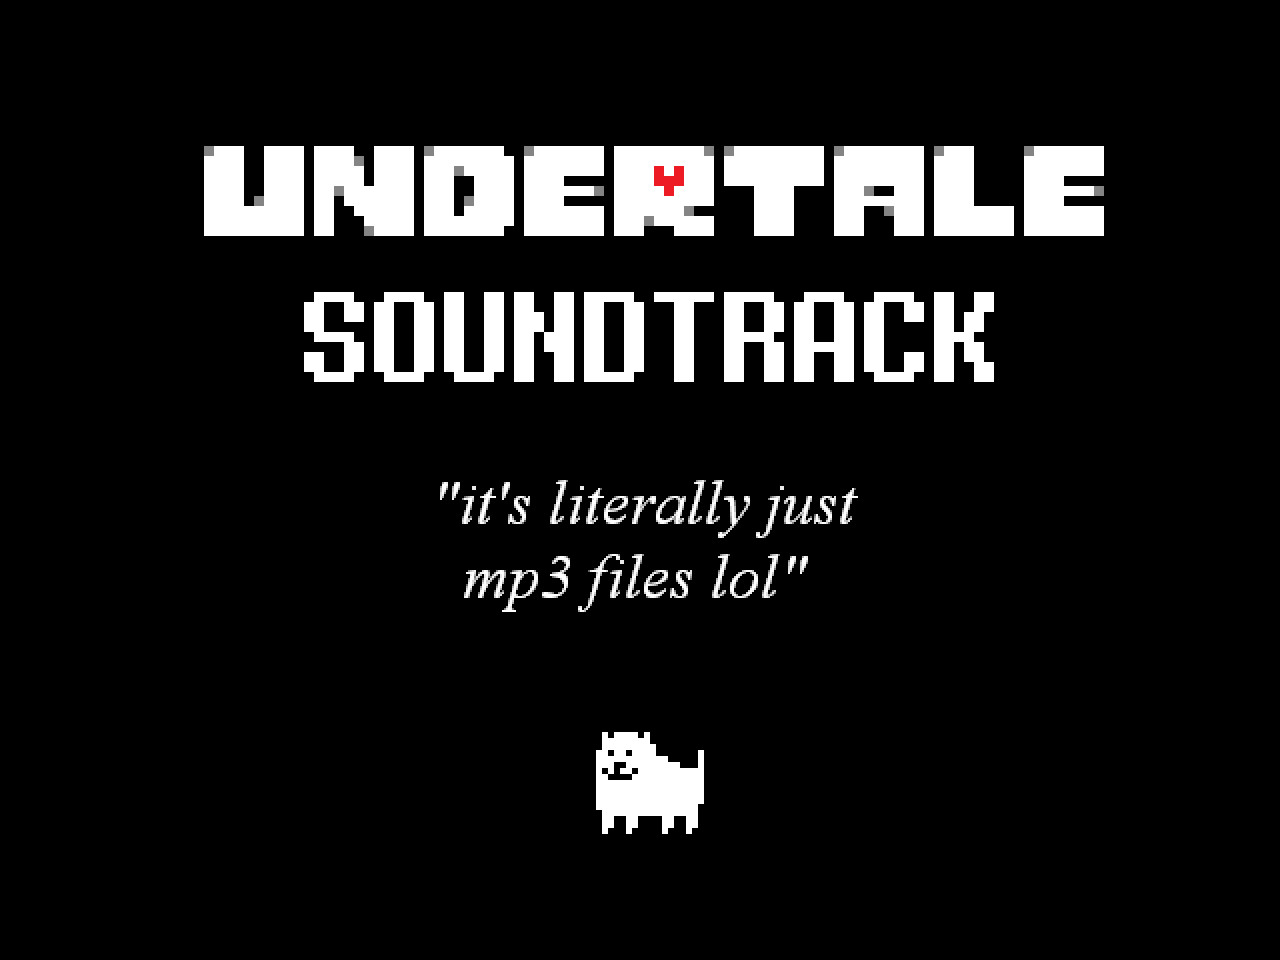 undertale soundtrack download mp3